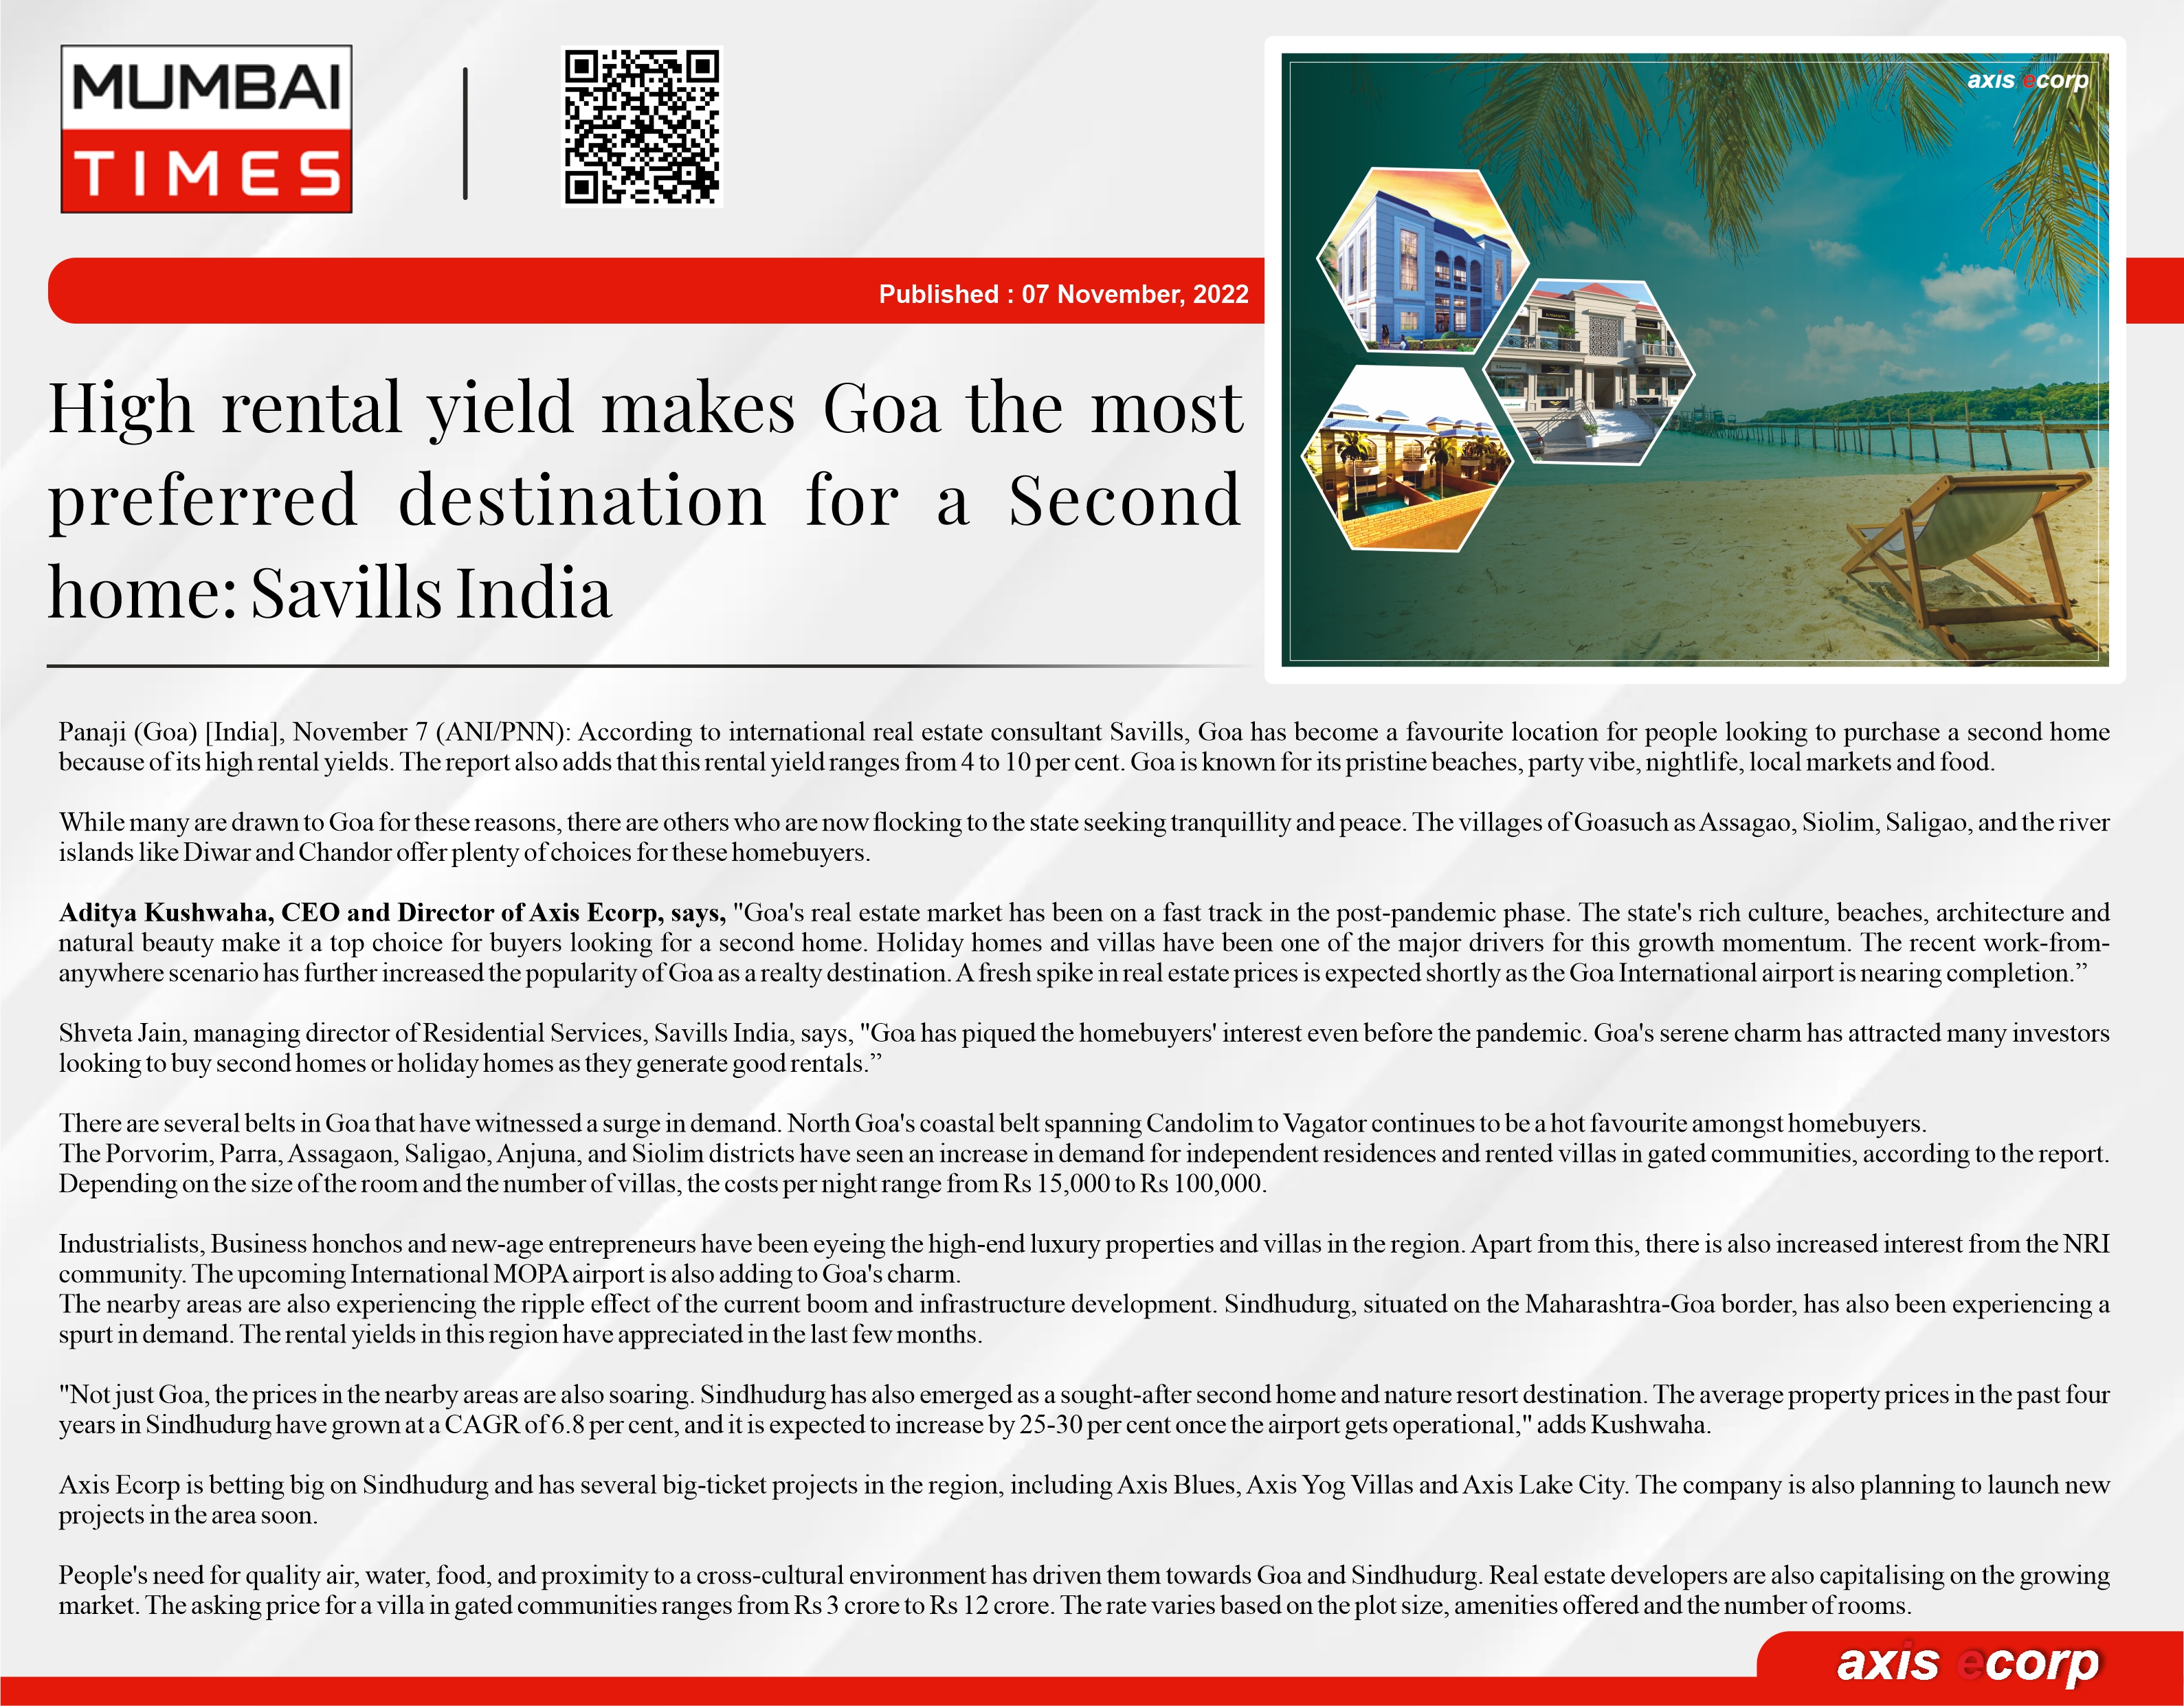 High rental yield makes Goa the most preferred destination 